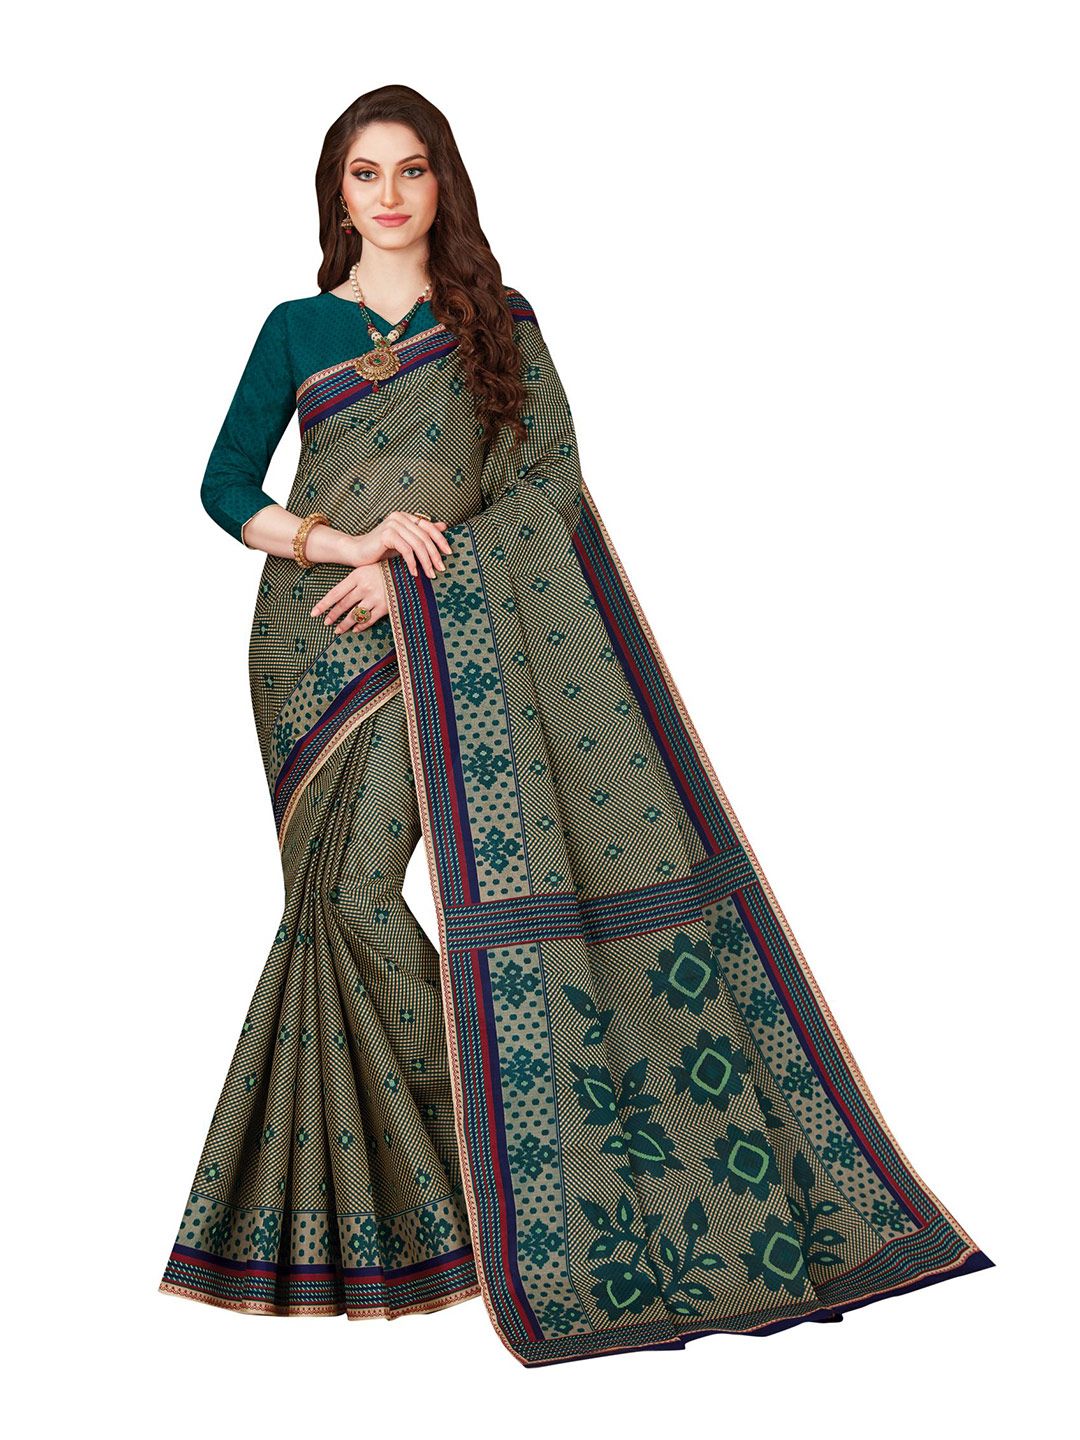 SHANVIKA Turquoise Blue & Maroon Pure Cotton  Block Print Saree Price in India